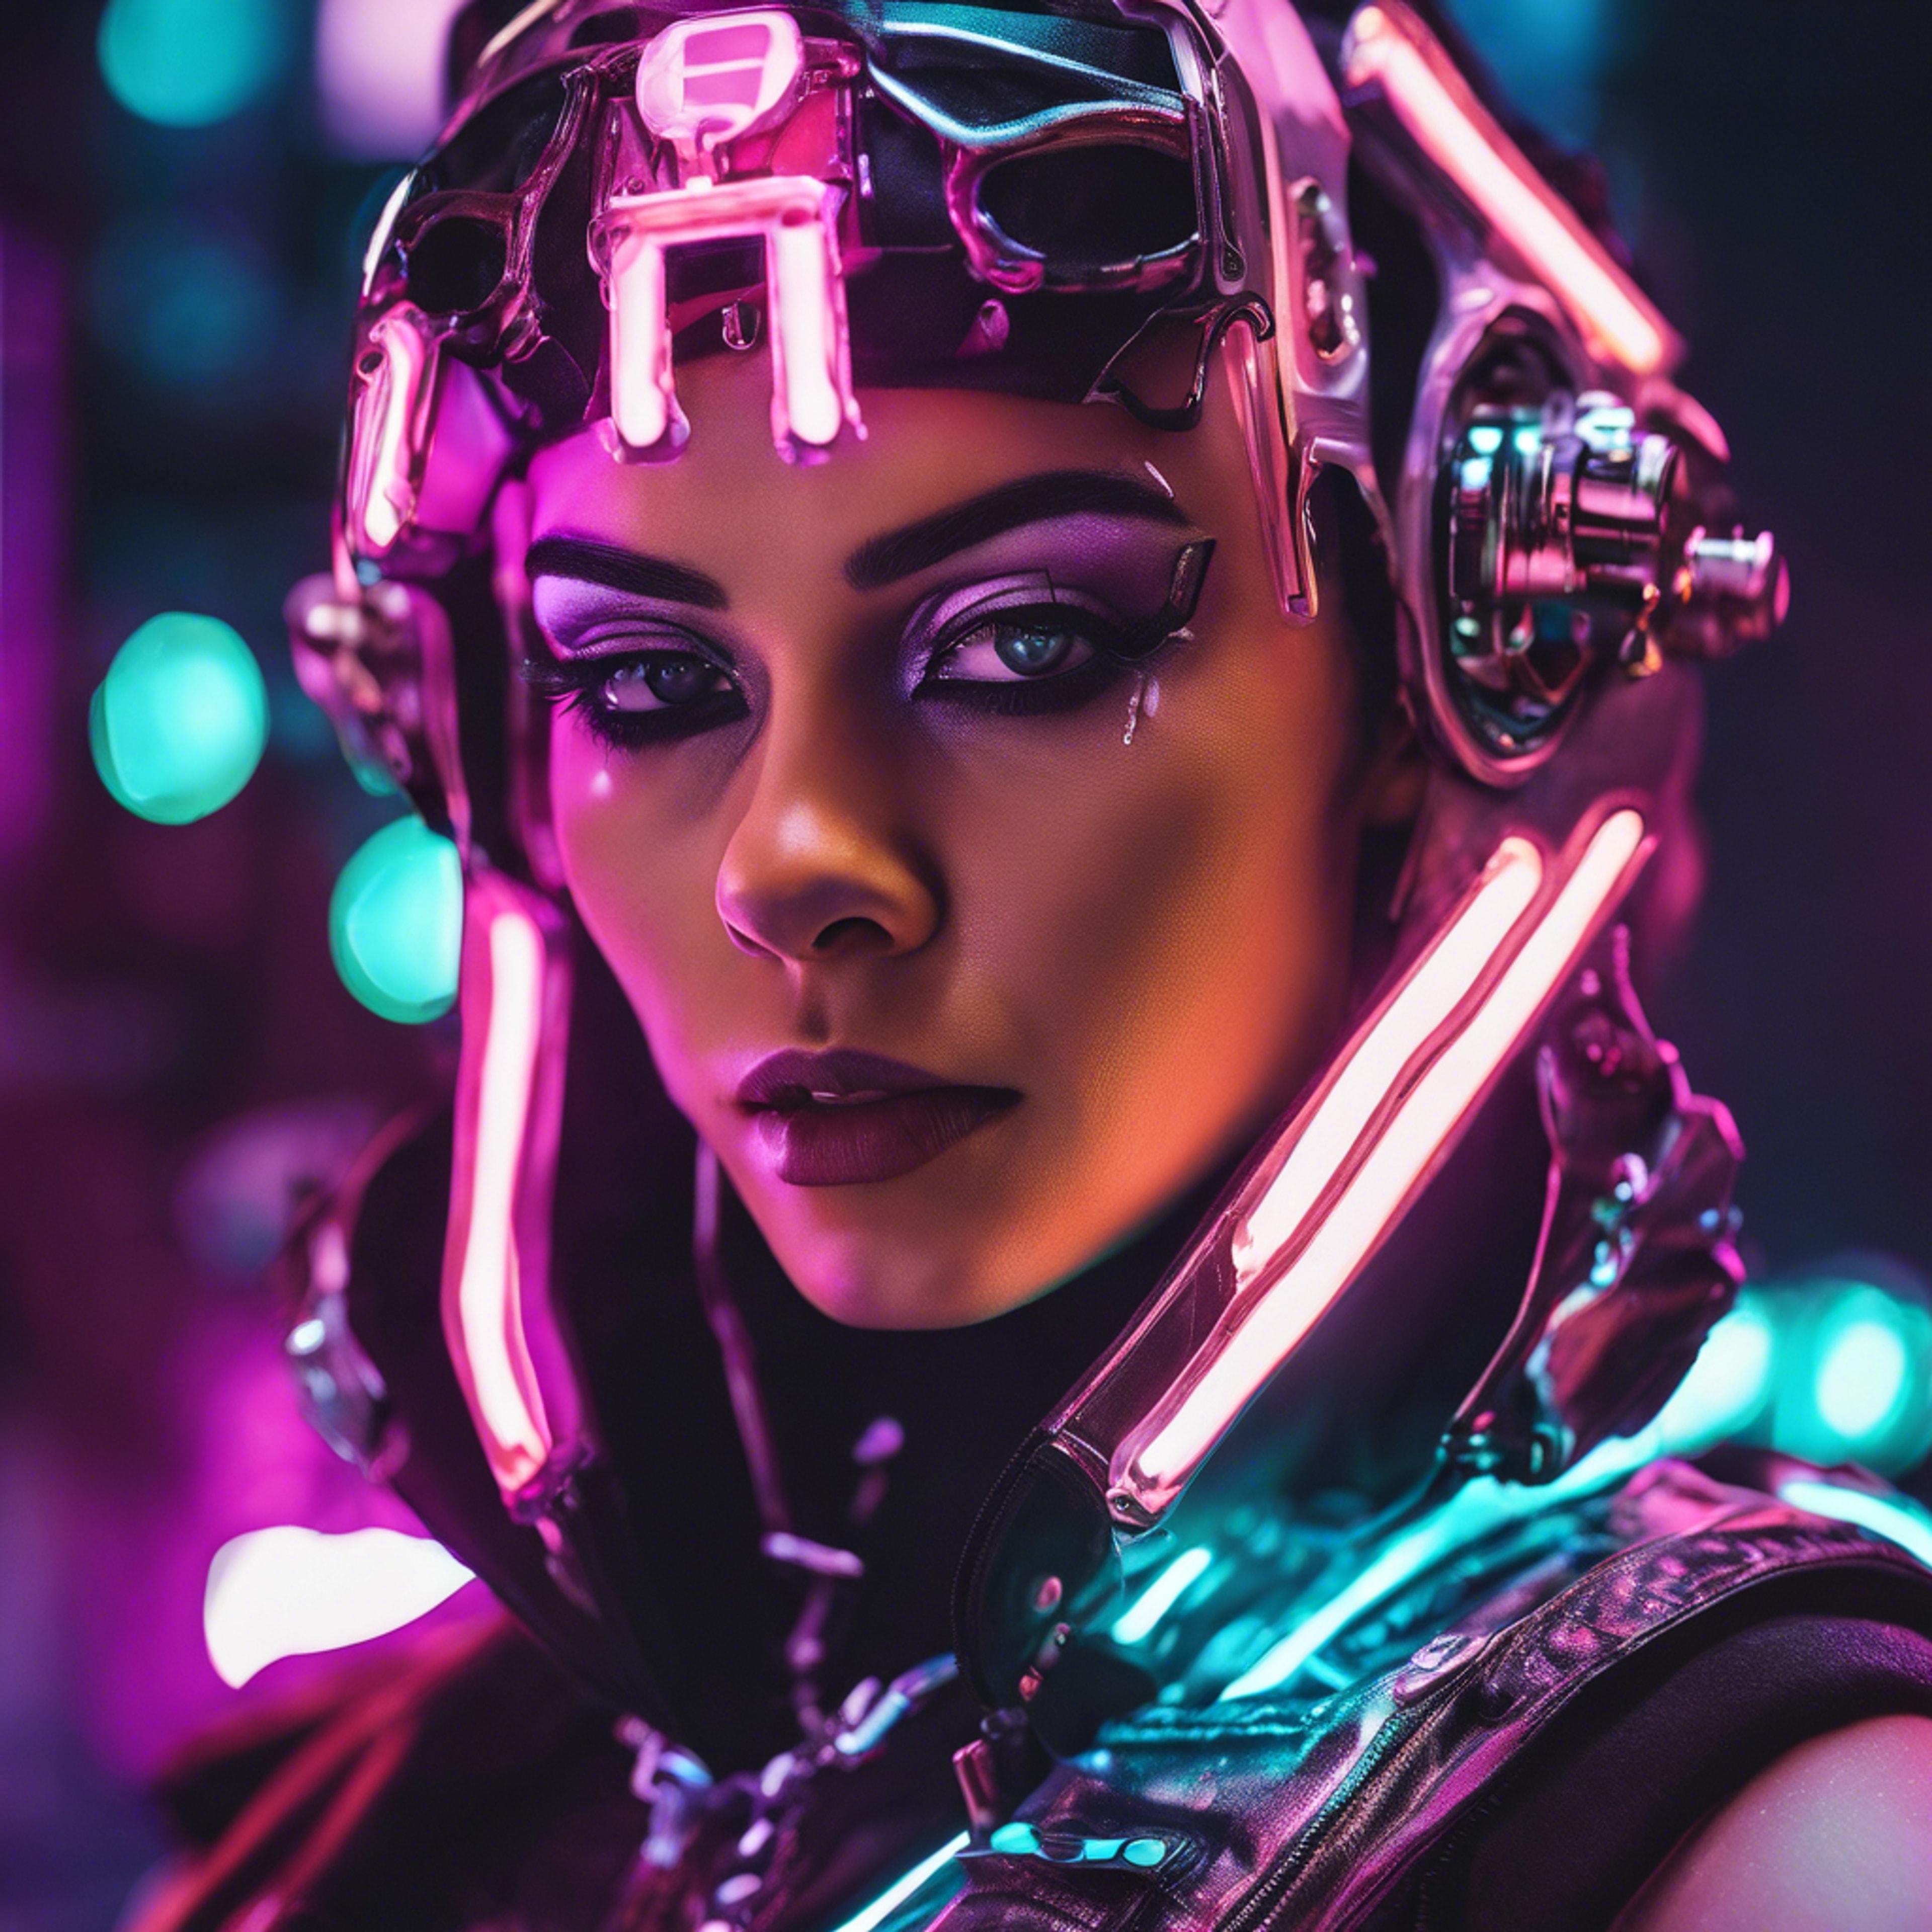 A close-up portrait of a cyberpunk baddie in neon lighting, metal piercings, and sci-fi-inspired makeup. Tapeta[9ac0123c92044077bebc]